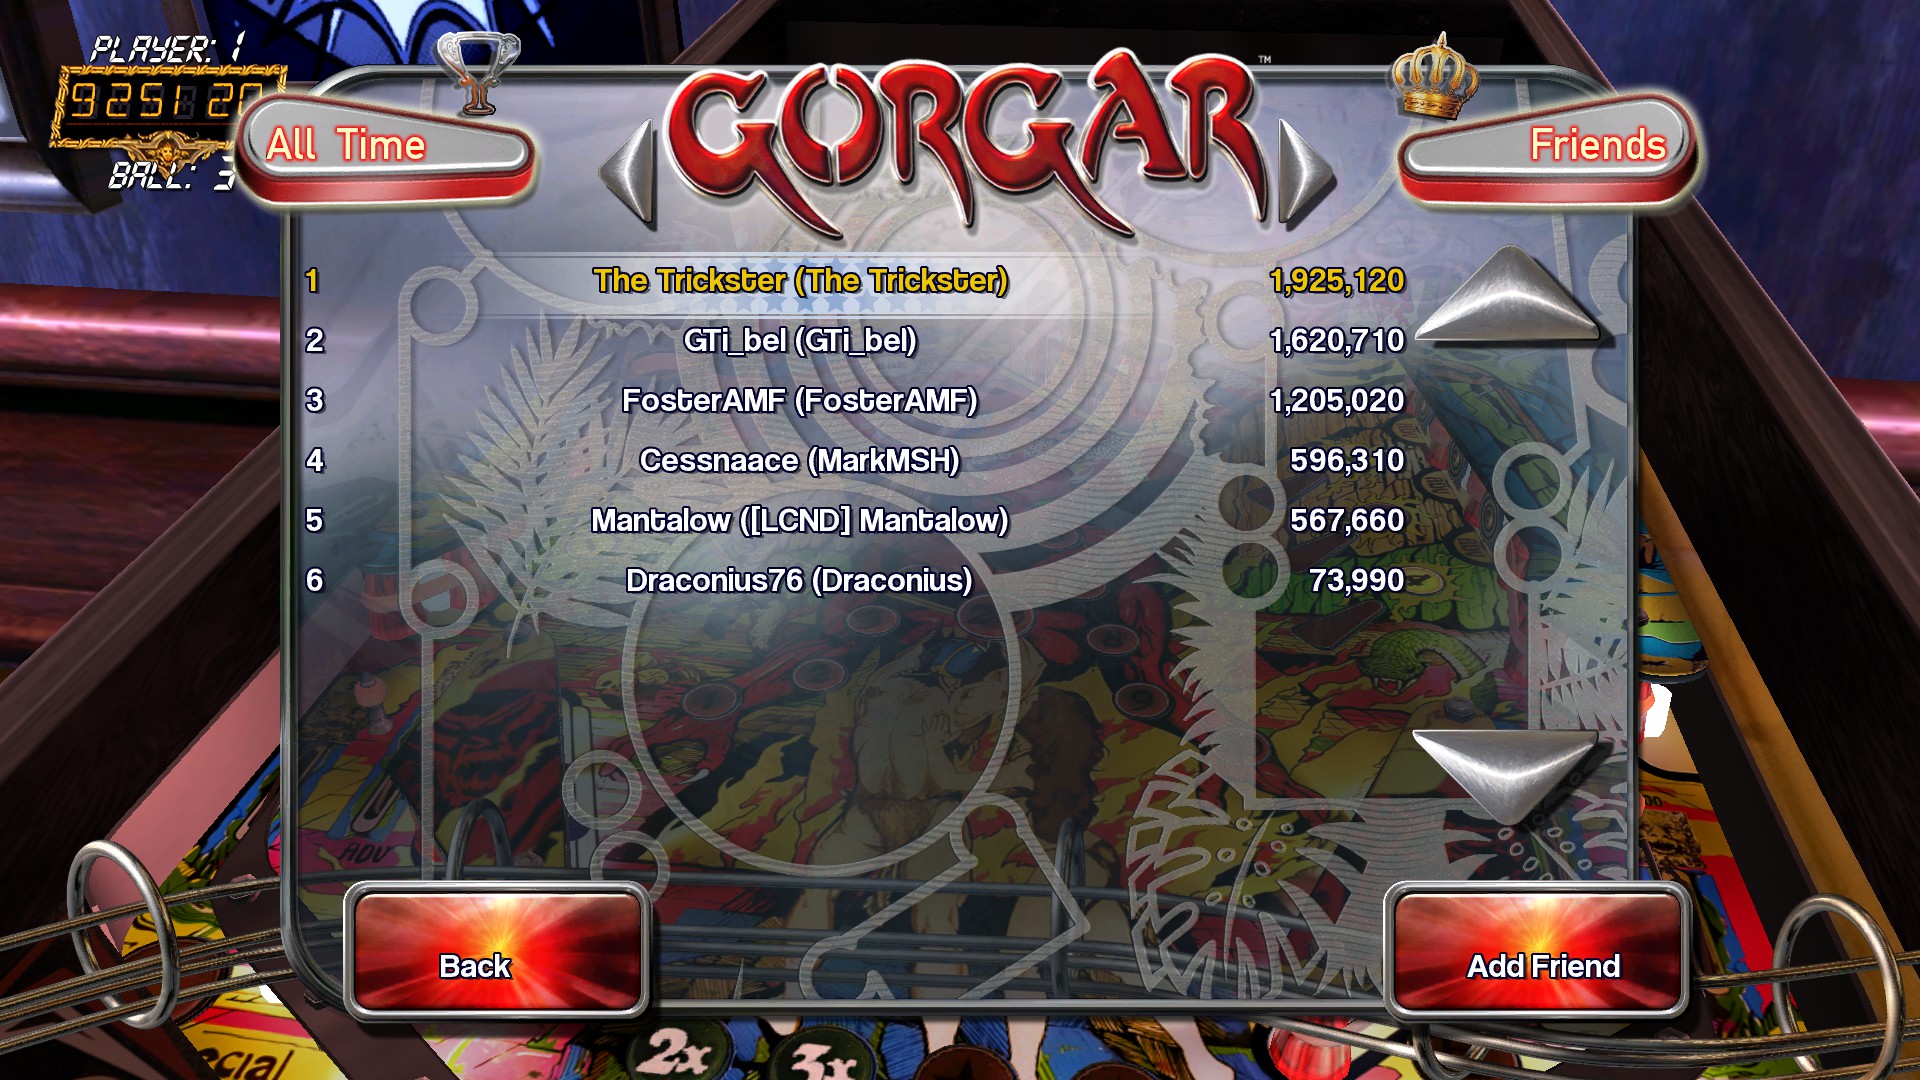 TheTrickster: Pinball Arcade: Gorgar (PC) 1,925,120 points on 2016-05-07 01:34:46